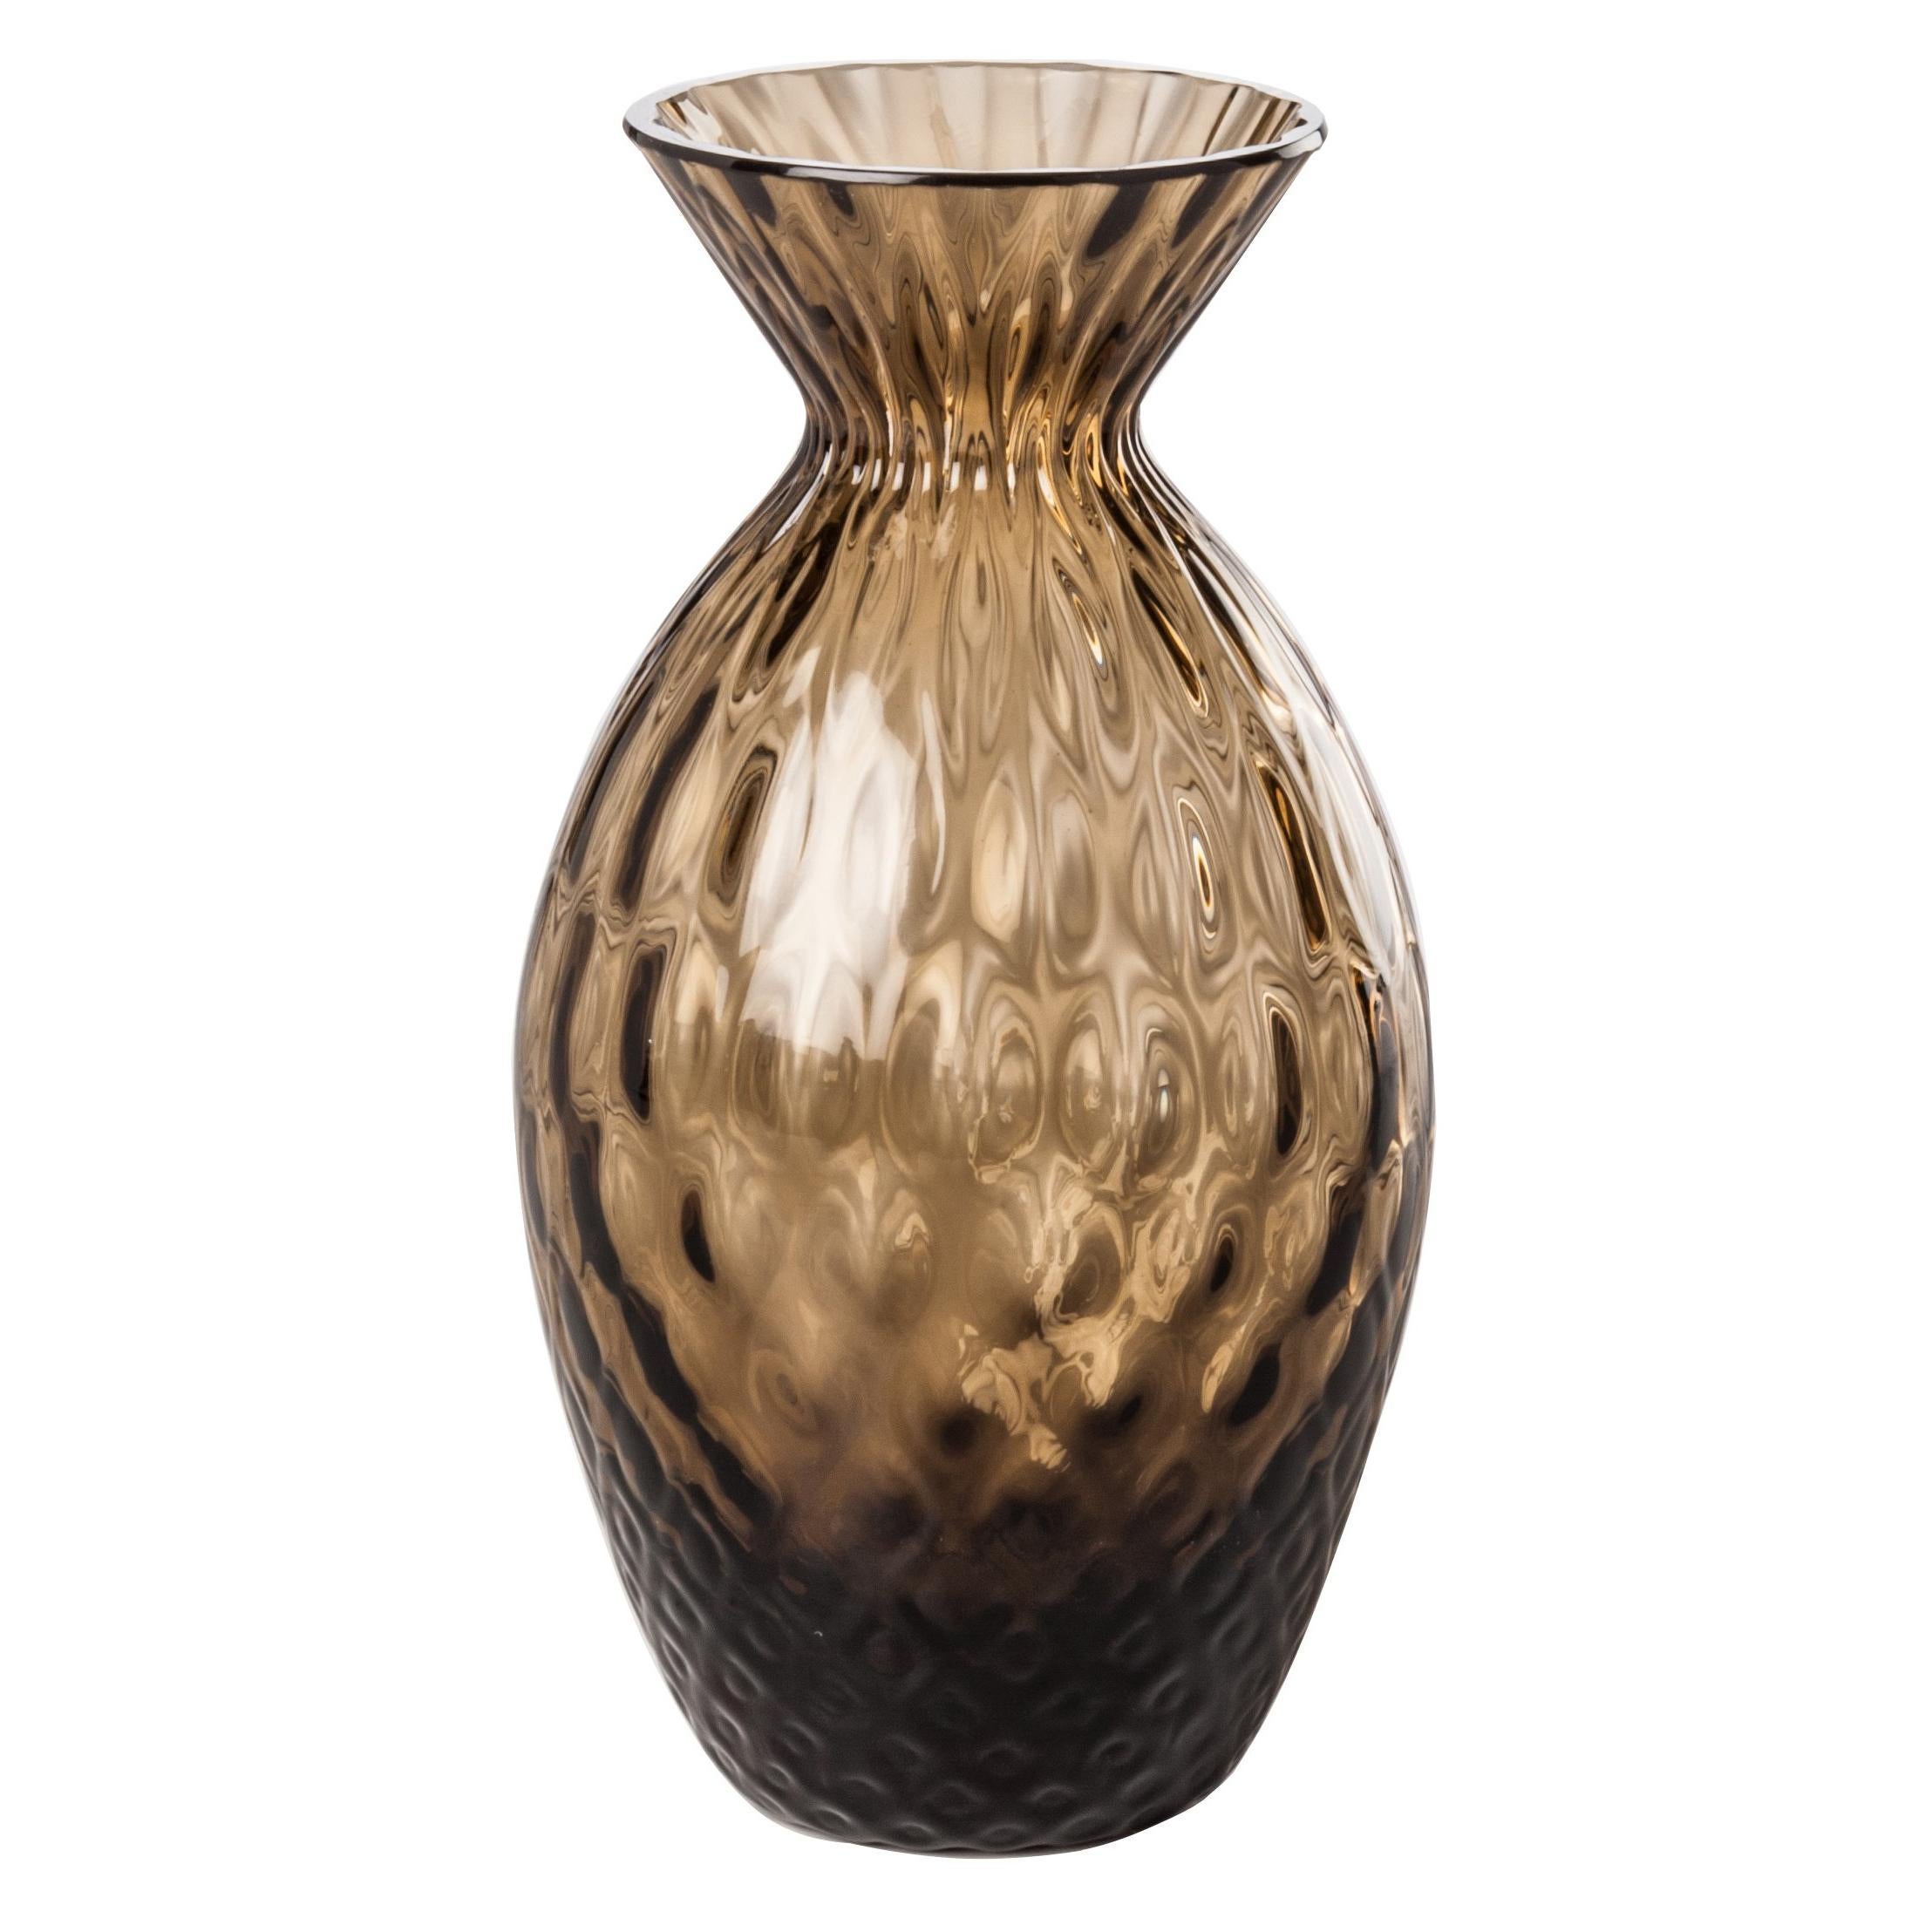 Gemme Glass Vase in Tea by Venini